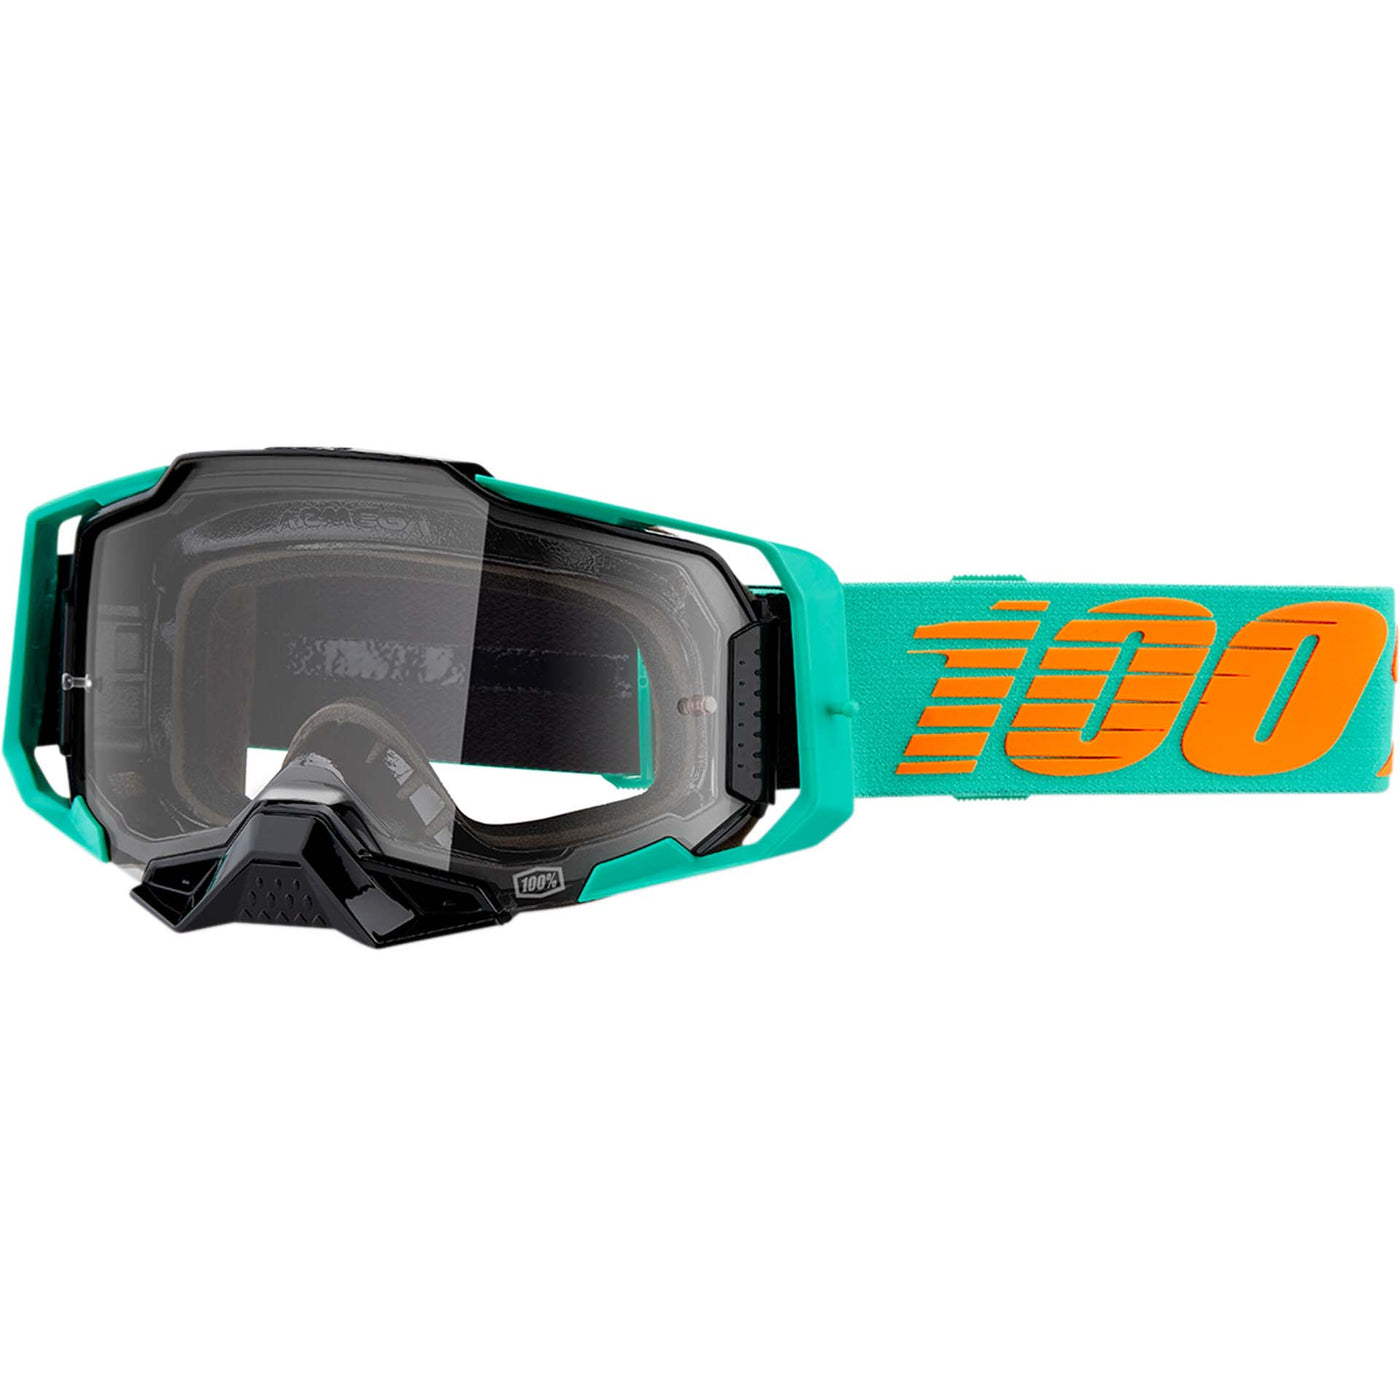 100% Armega Goggles — Clear Lens